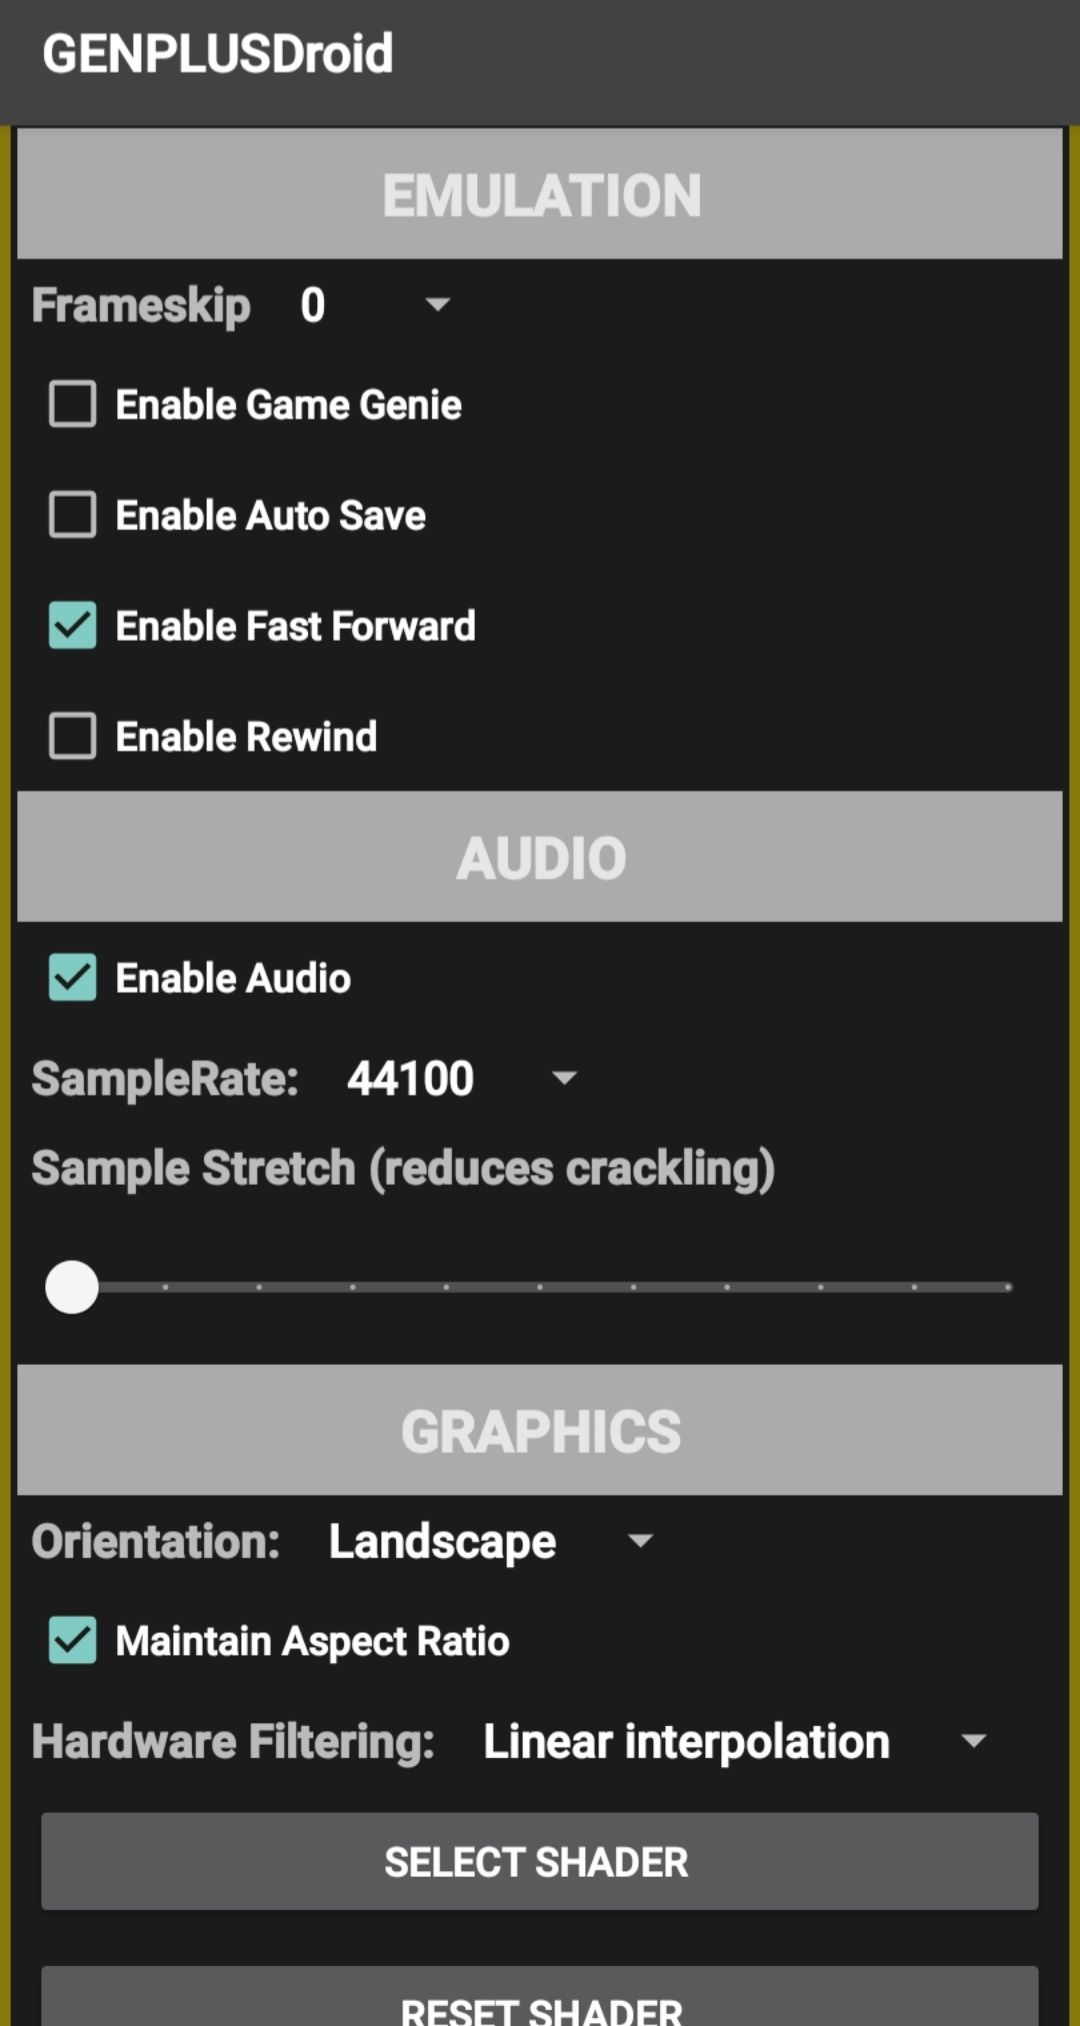 Screenshot of GENPLUSdroid options menu